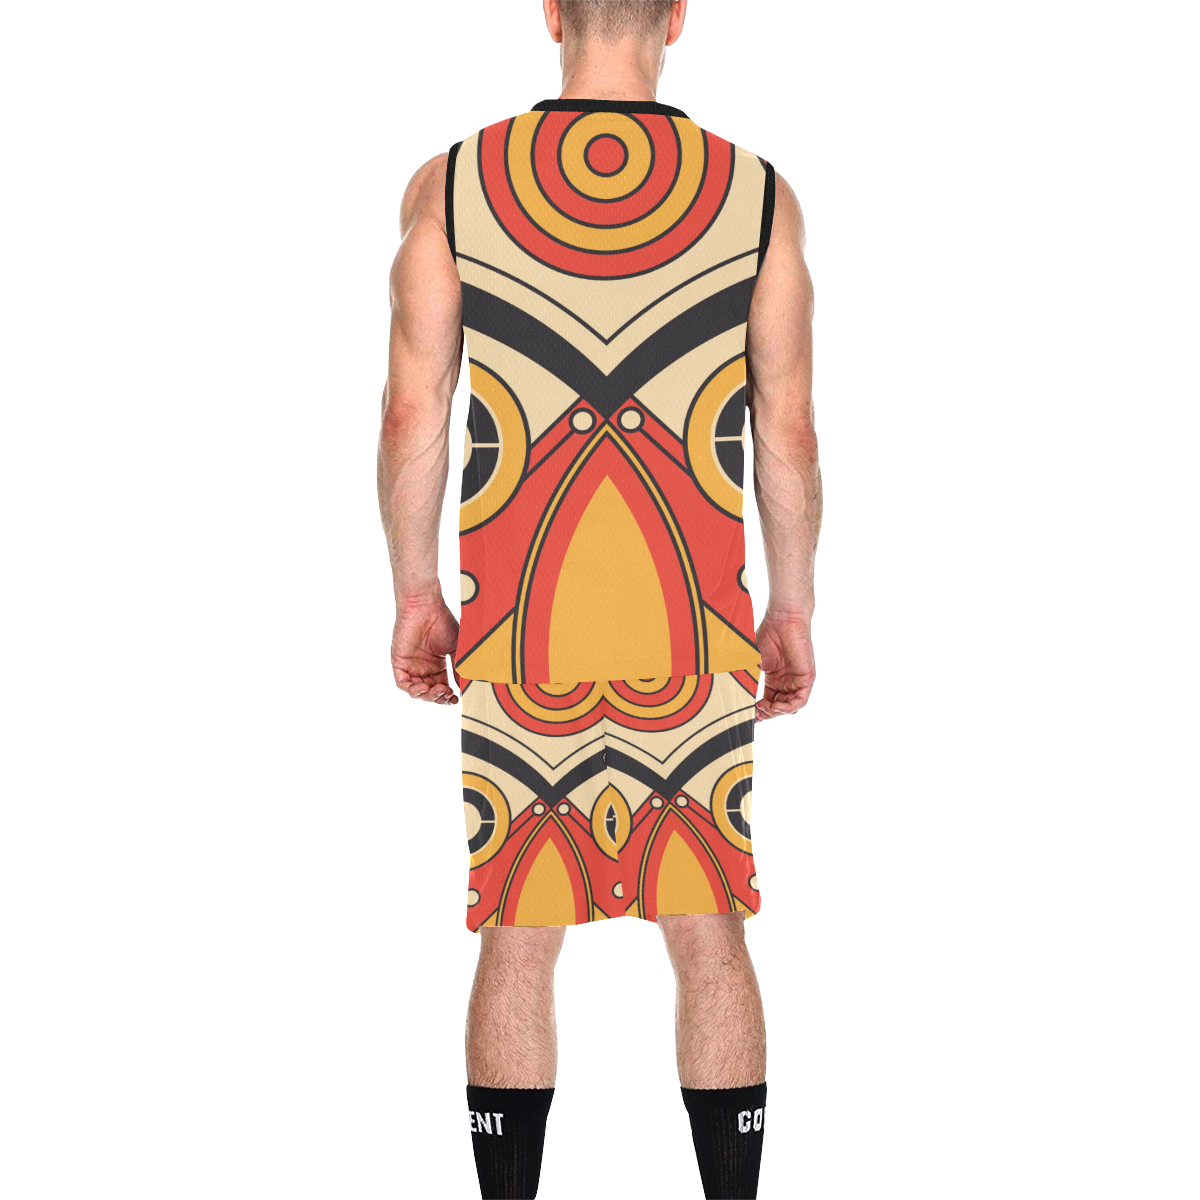 Geo Aztec Bull Tribal All Over Print Basketball Uniform